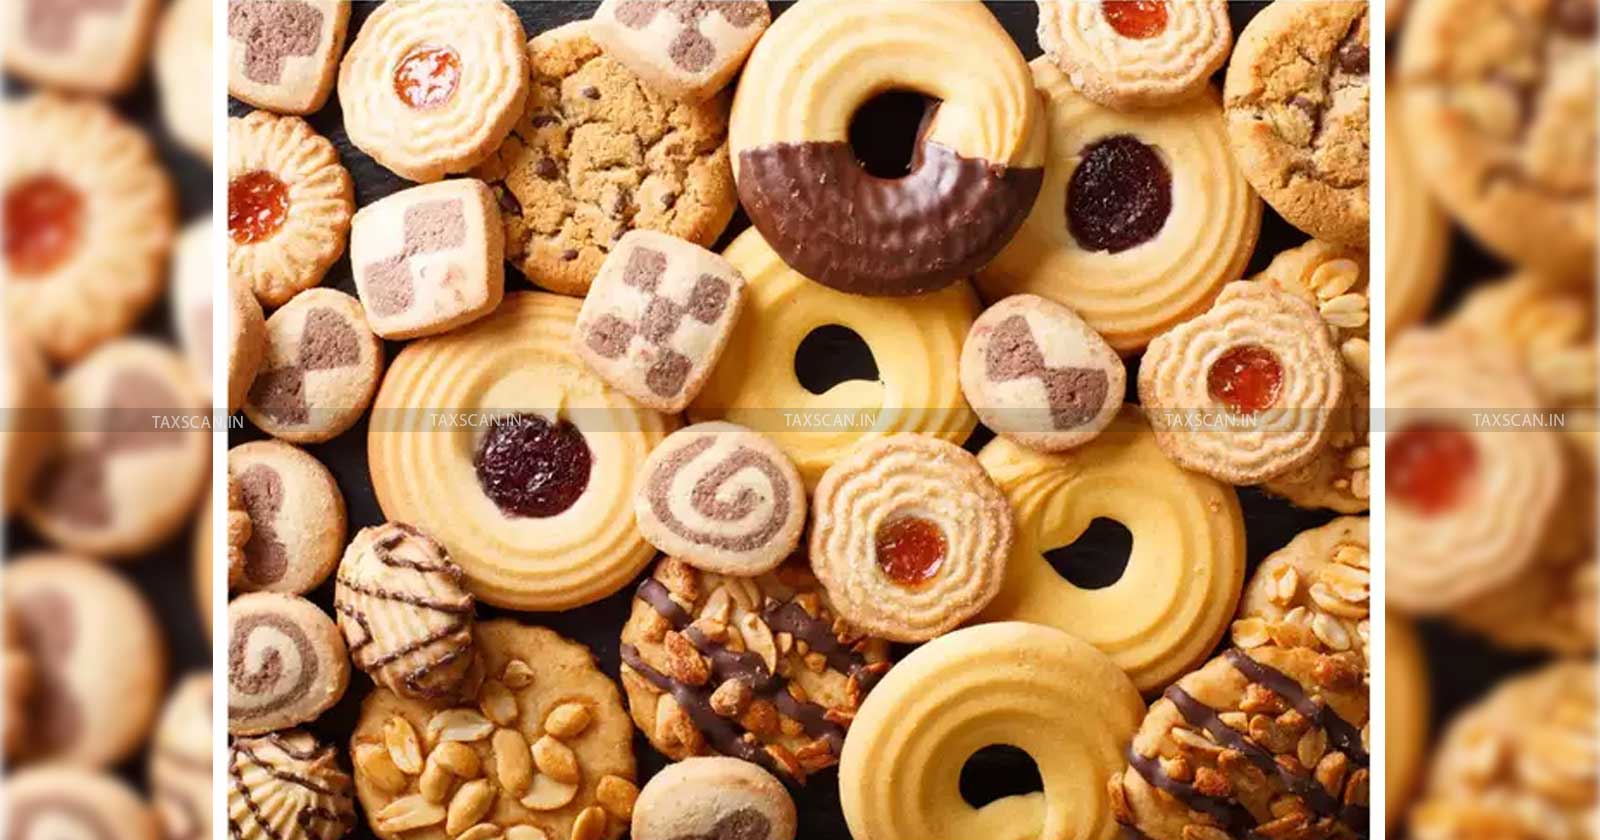 Biscuits qualify as Food Stuff - Food Stuff - Eligible for Service Tax Refund - Service Tax Refund - Service Tax - Tax Refund - CESTAT - TAXSCAN